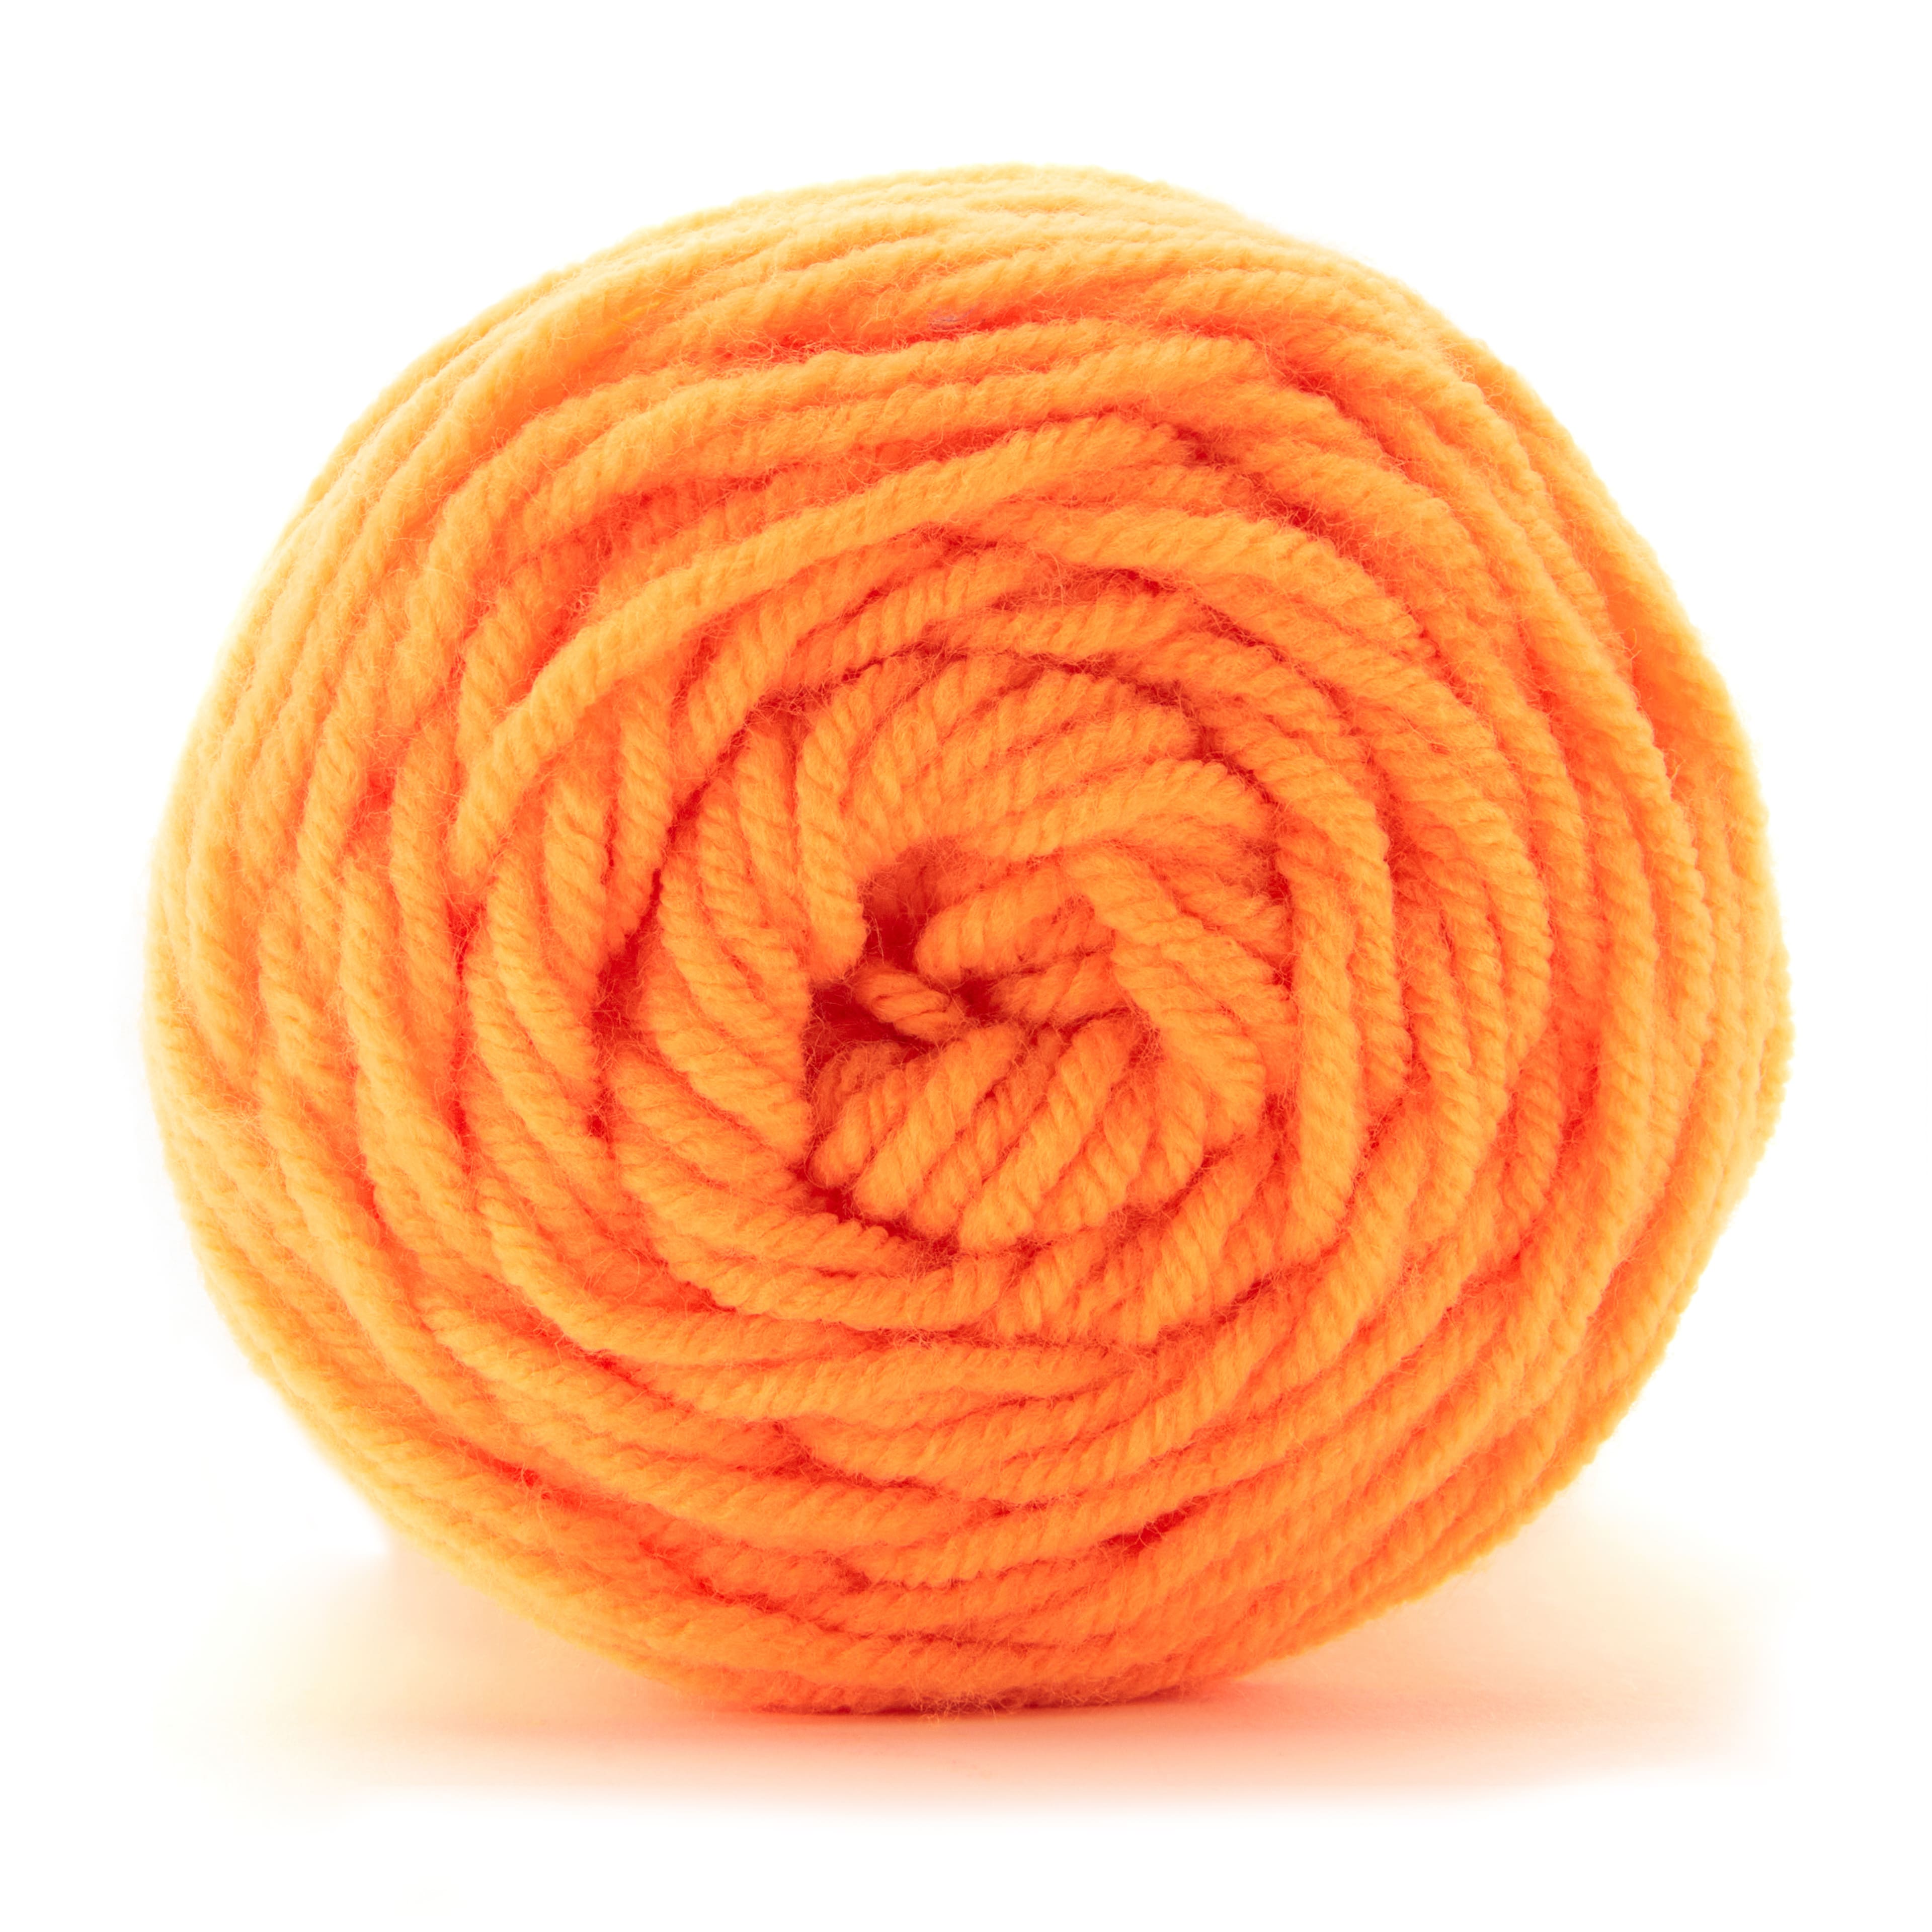 Soft Classic Neon Yarn by Loops & Threads - Neon Yarn for Knitting,  Crochet, Weaving, Arts & Crafts - Neon Yellow, Bulk 12 Pack